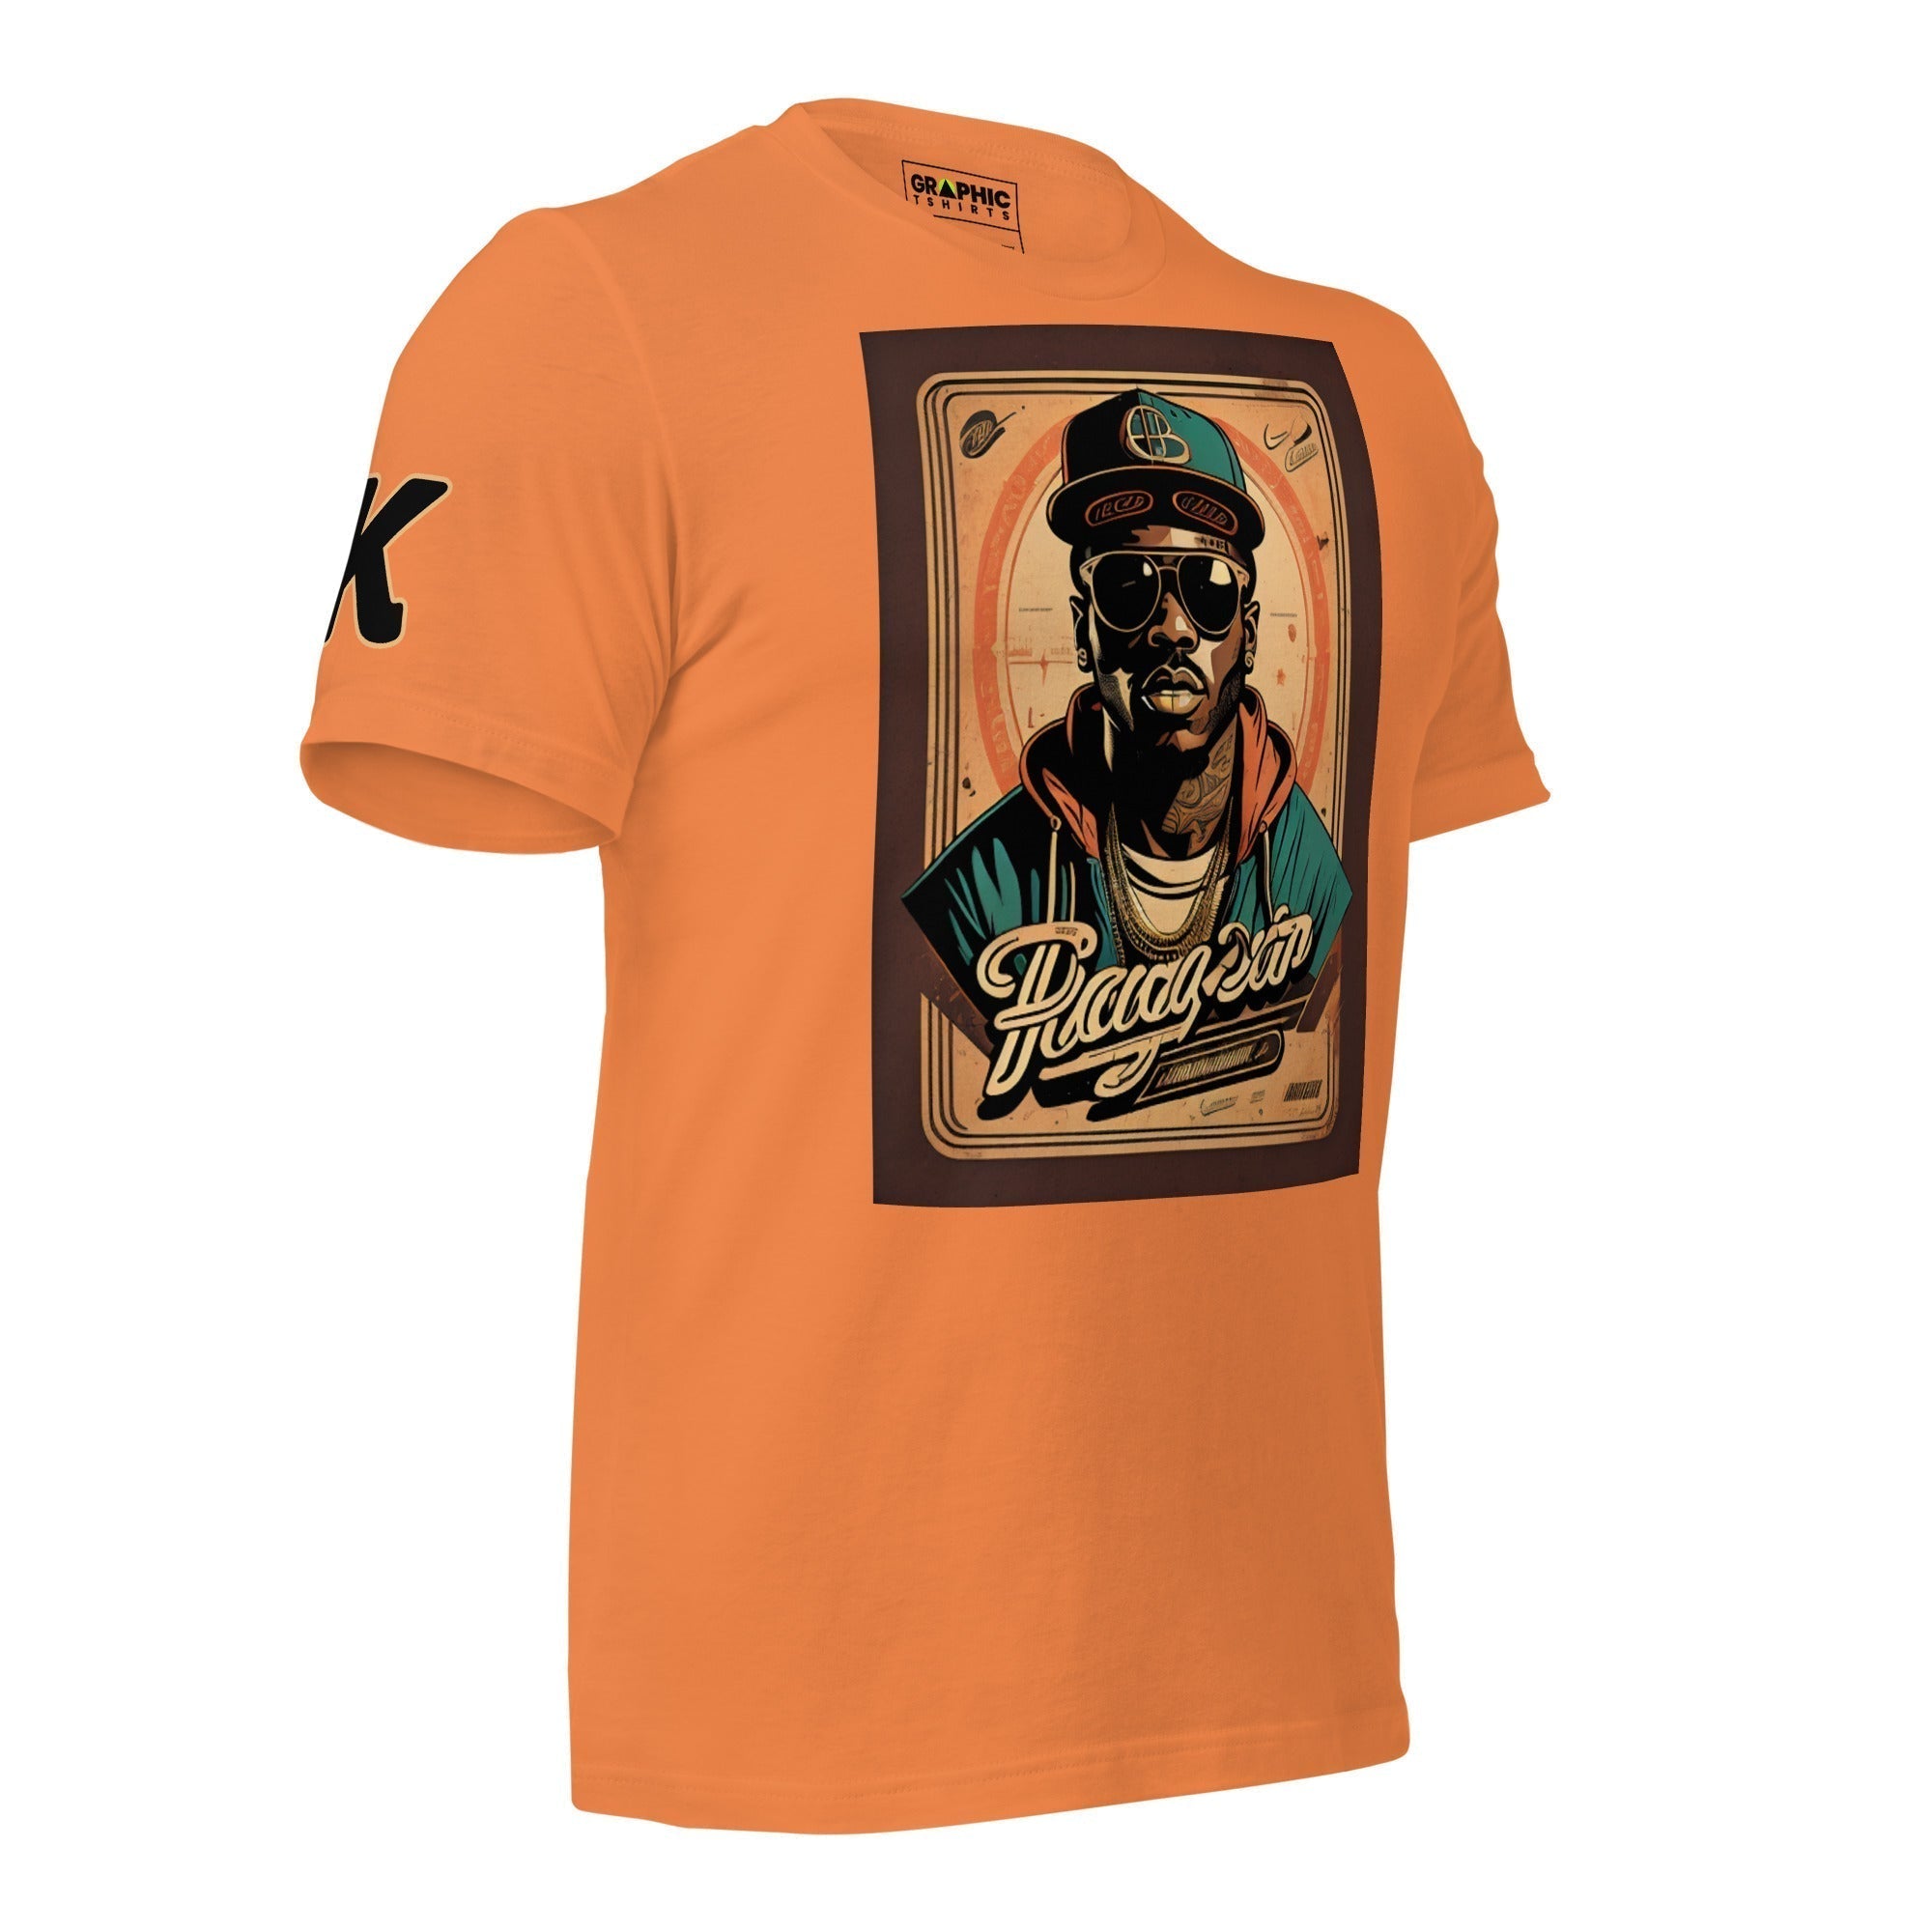 Unisex Crew Neck T-Shirt - Vintage Hip Hop Series v.11 - GRAPHIC T-SHIRTS